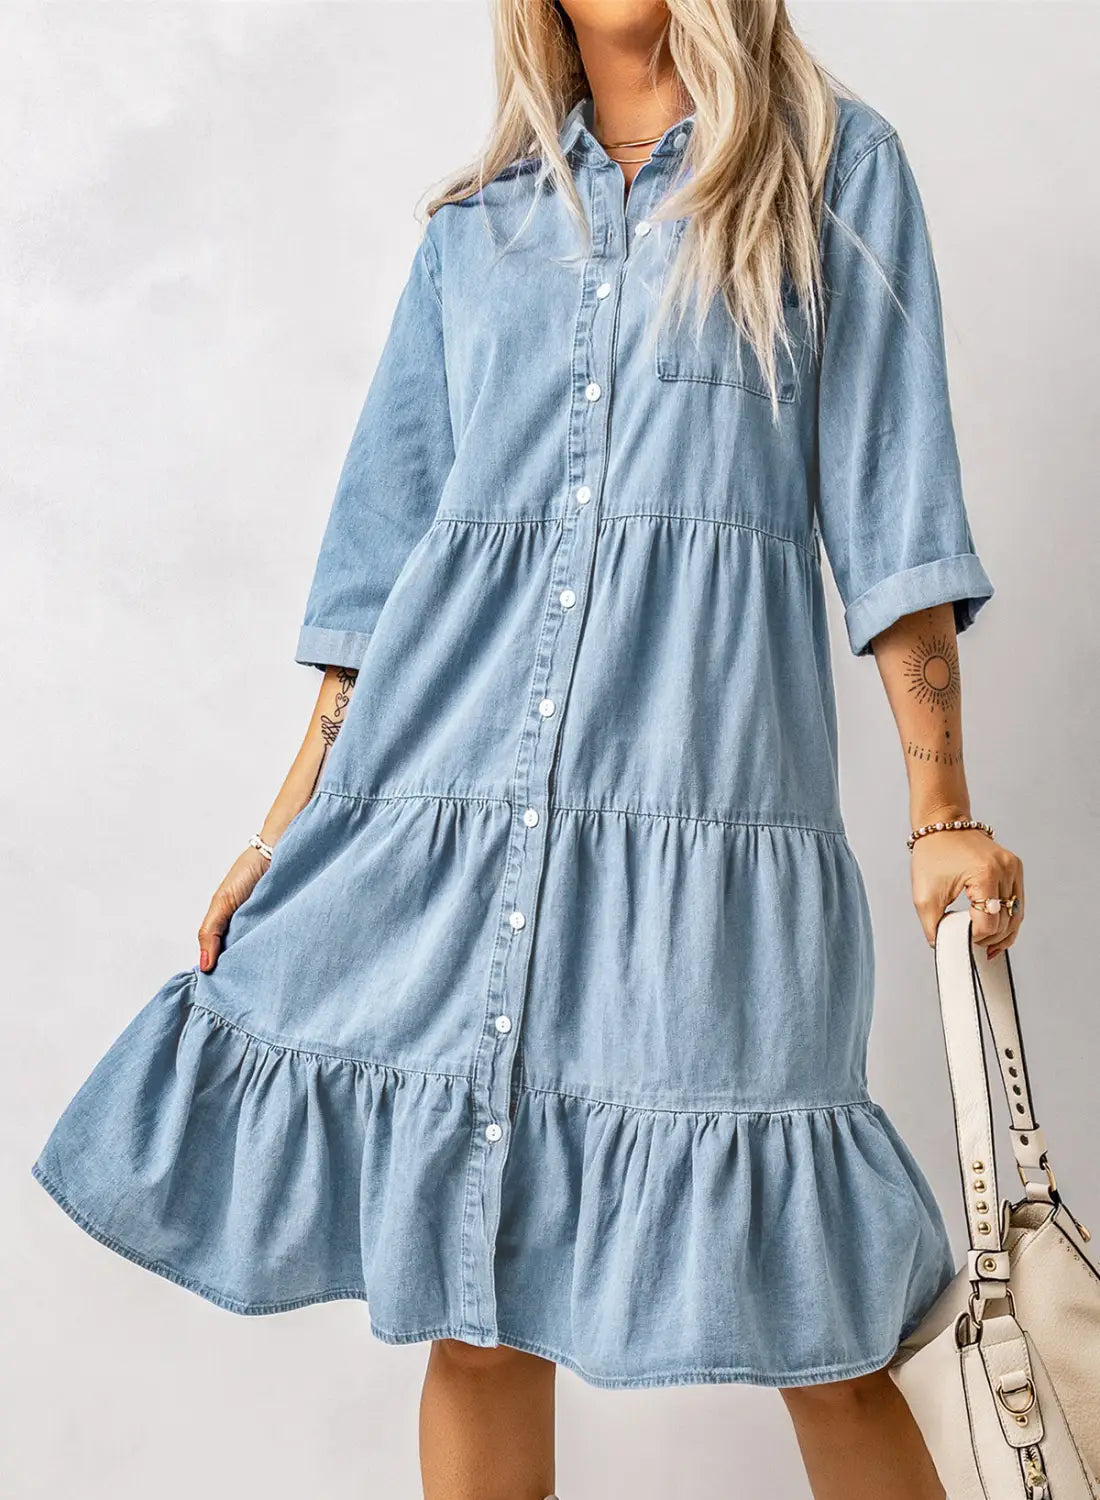 Sky blue ruffled denim full buttoned midi dress - s 100% cotton dresses